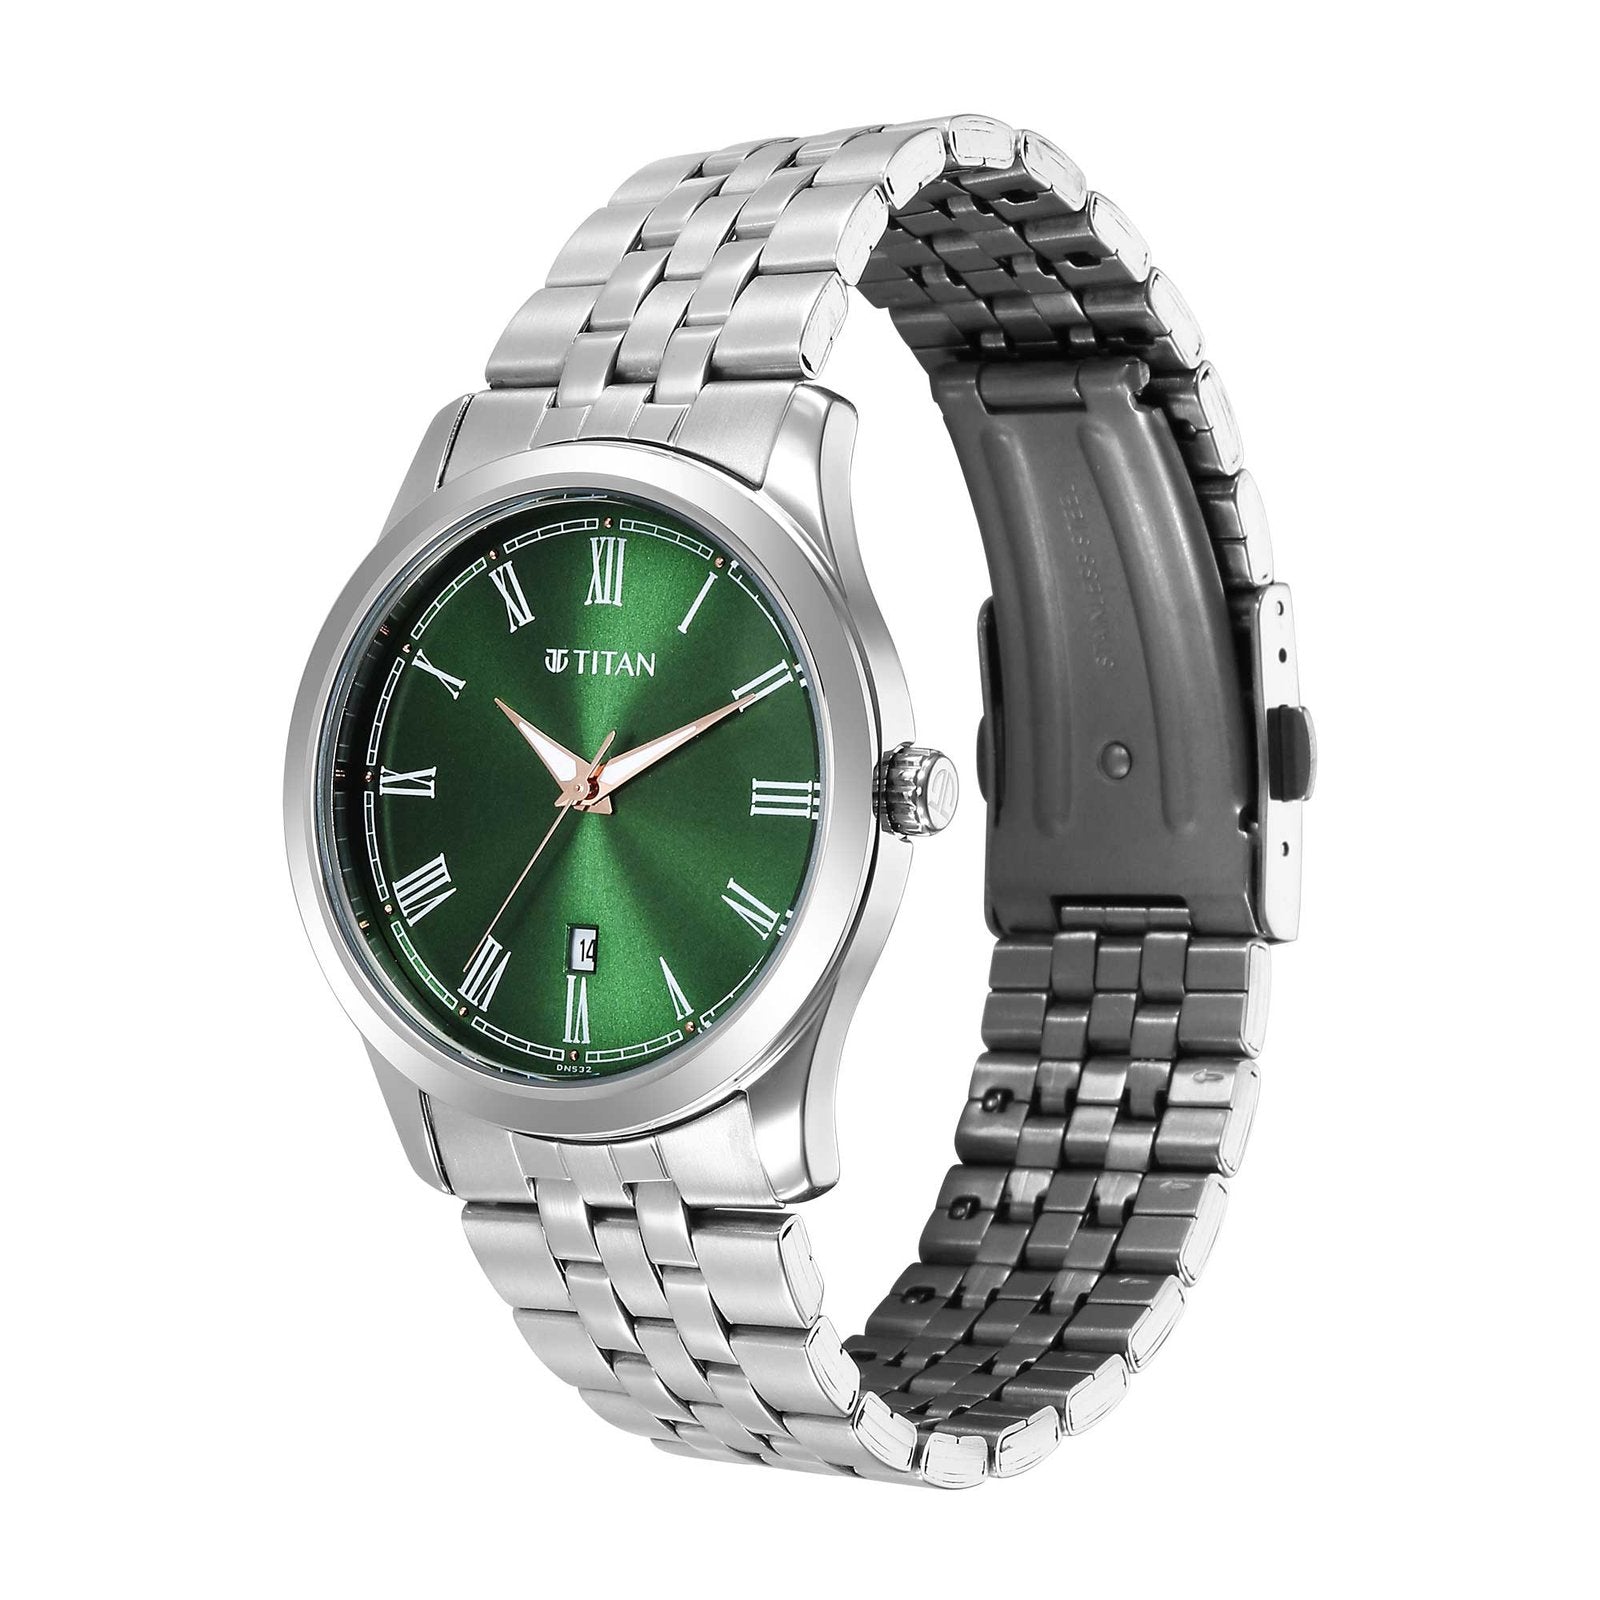 Shop Now Titan Analog Metal Strap for Men's Watch | Watches & Accessories | Best Watches in Bahrain | Halabh.com